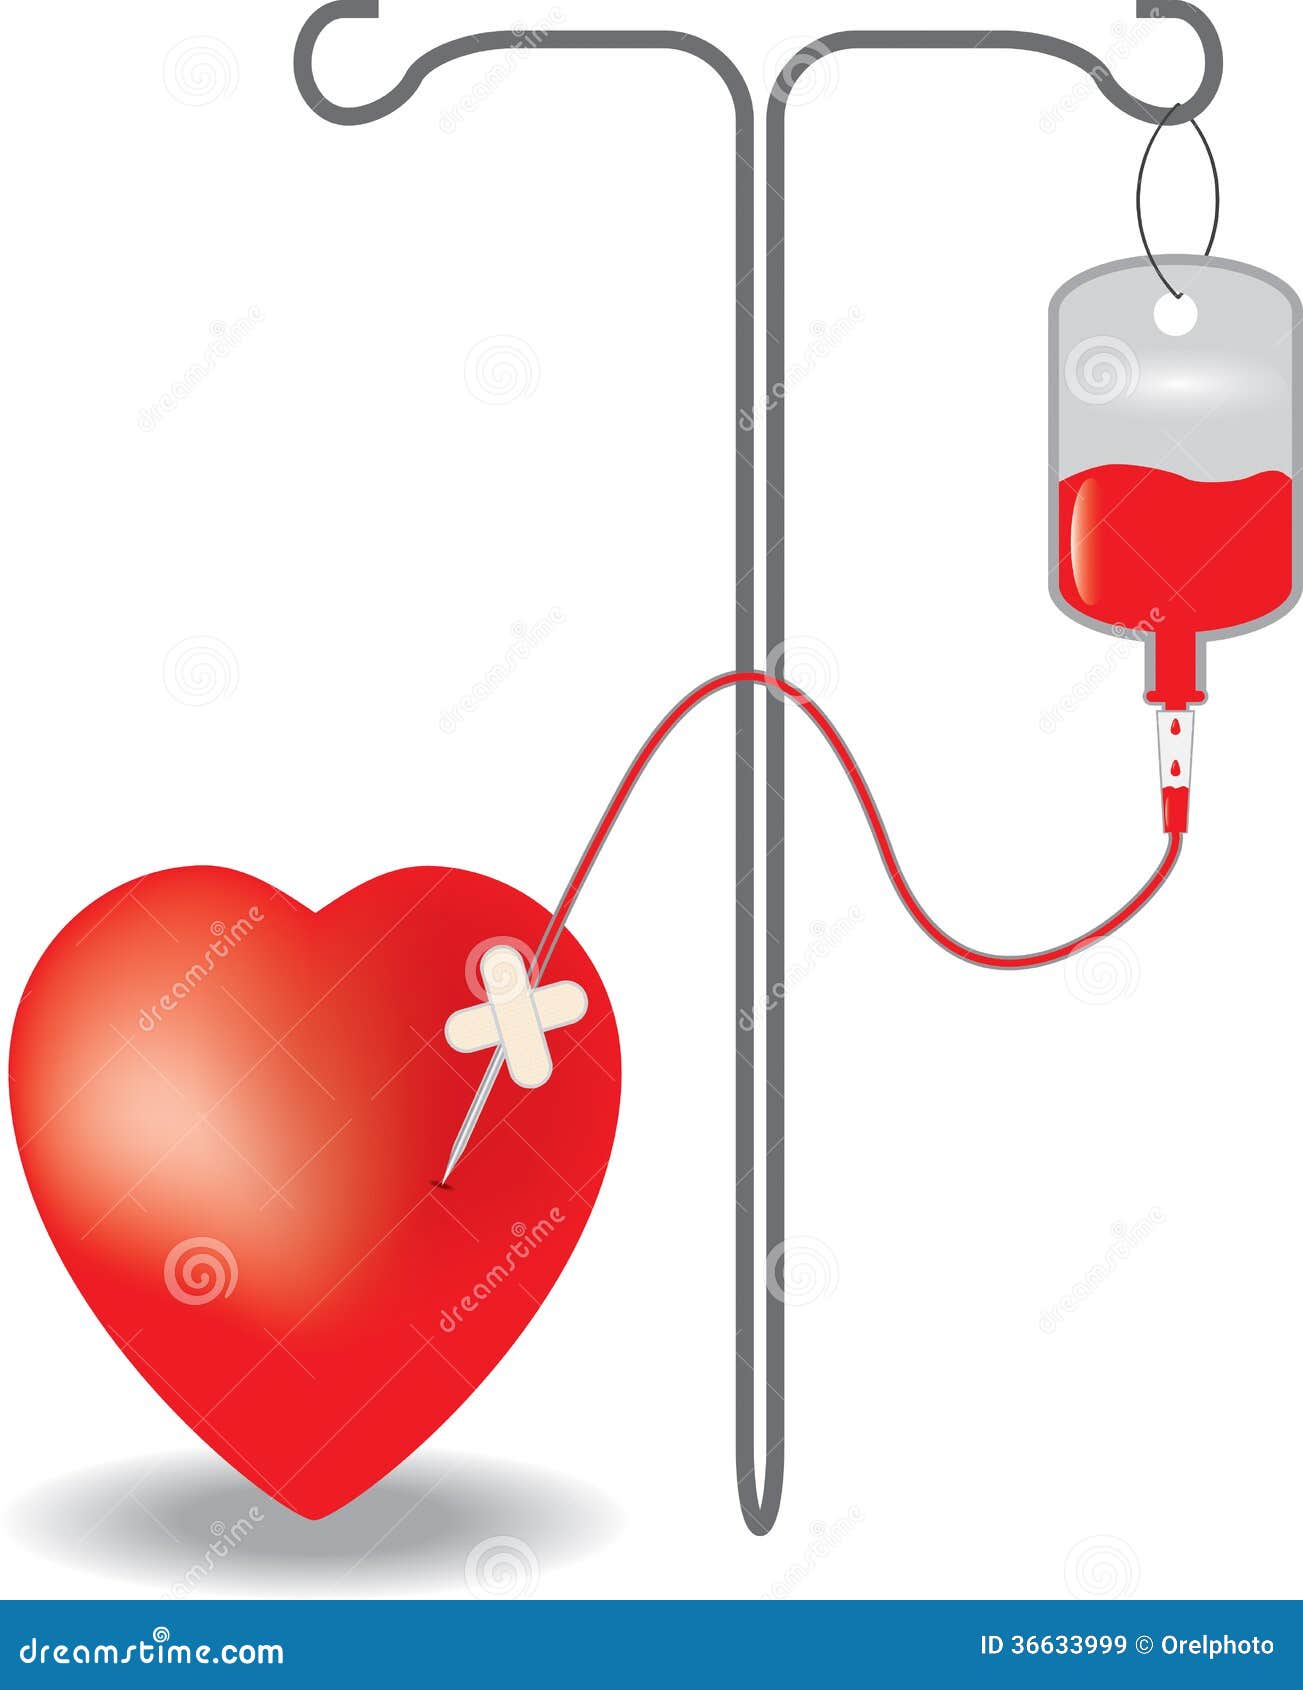 clipart blood transfusion - photo #5